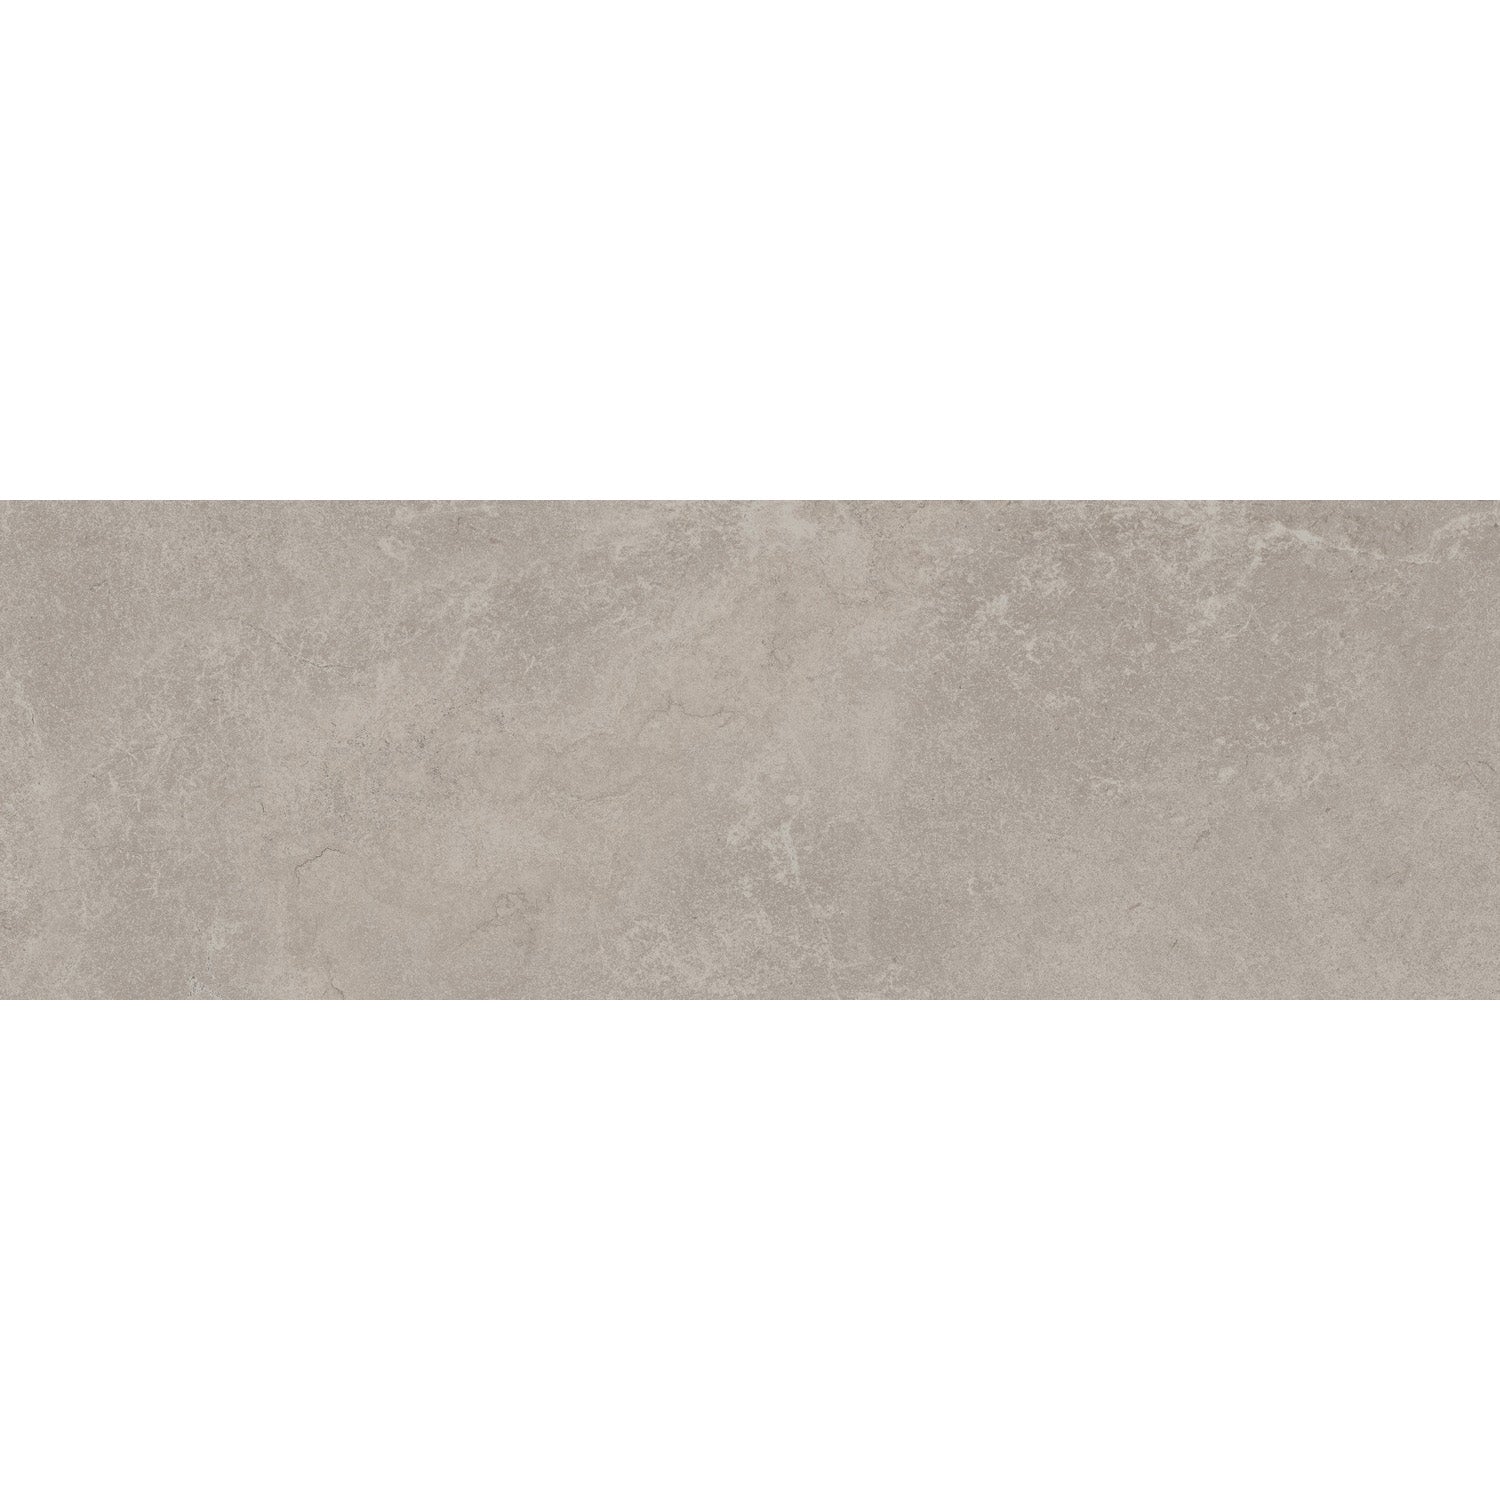 Daltile - Rhetoric - 8 in. x 24 in. Ceramic Wall Tile - Eloquent Grey